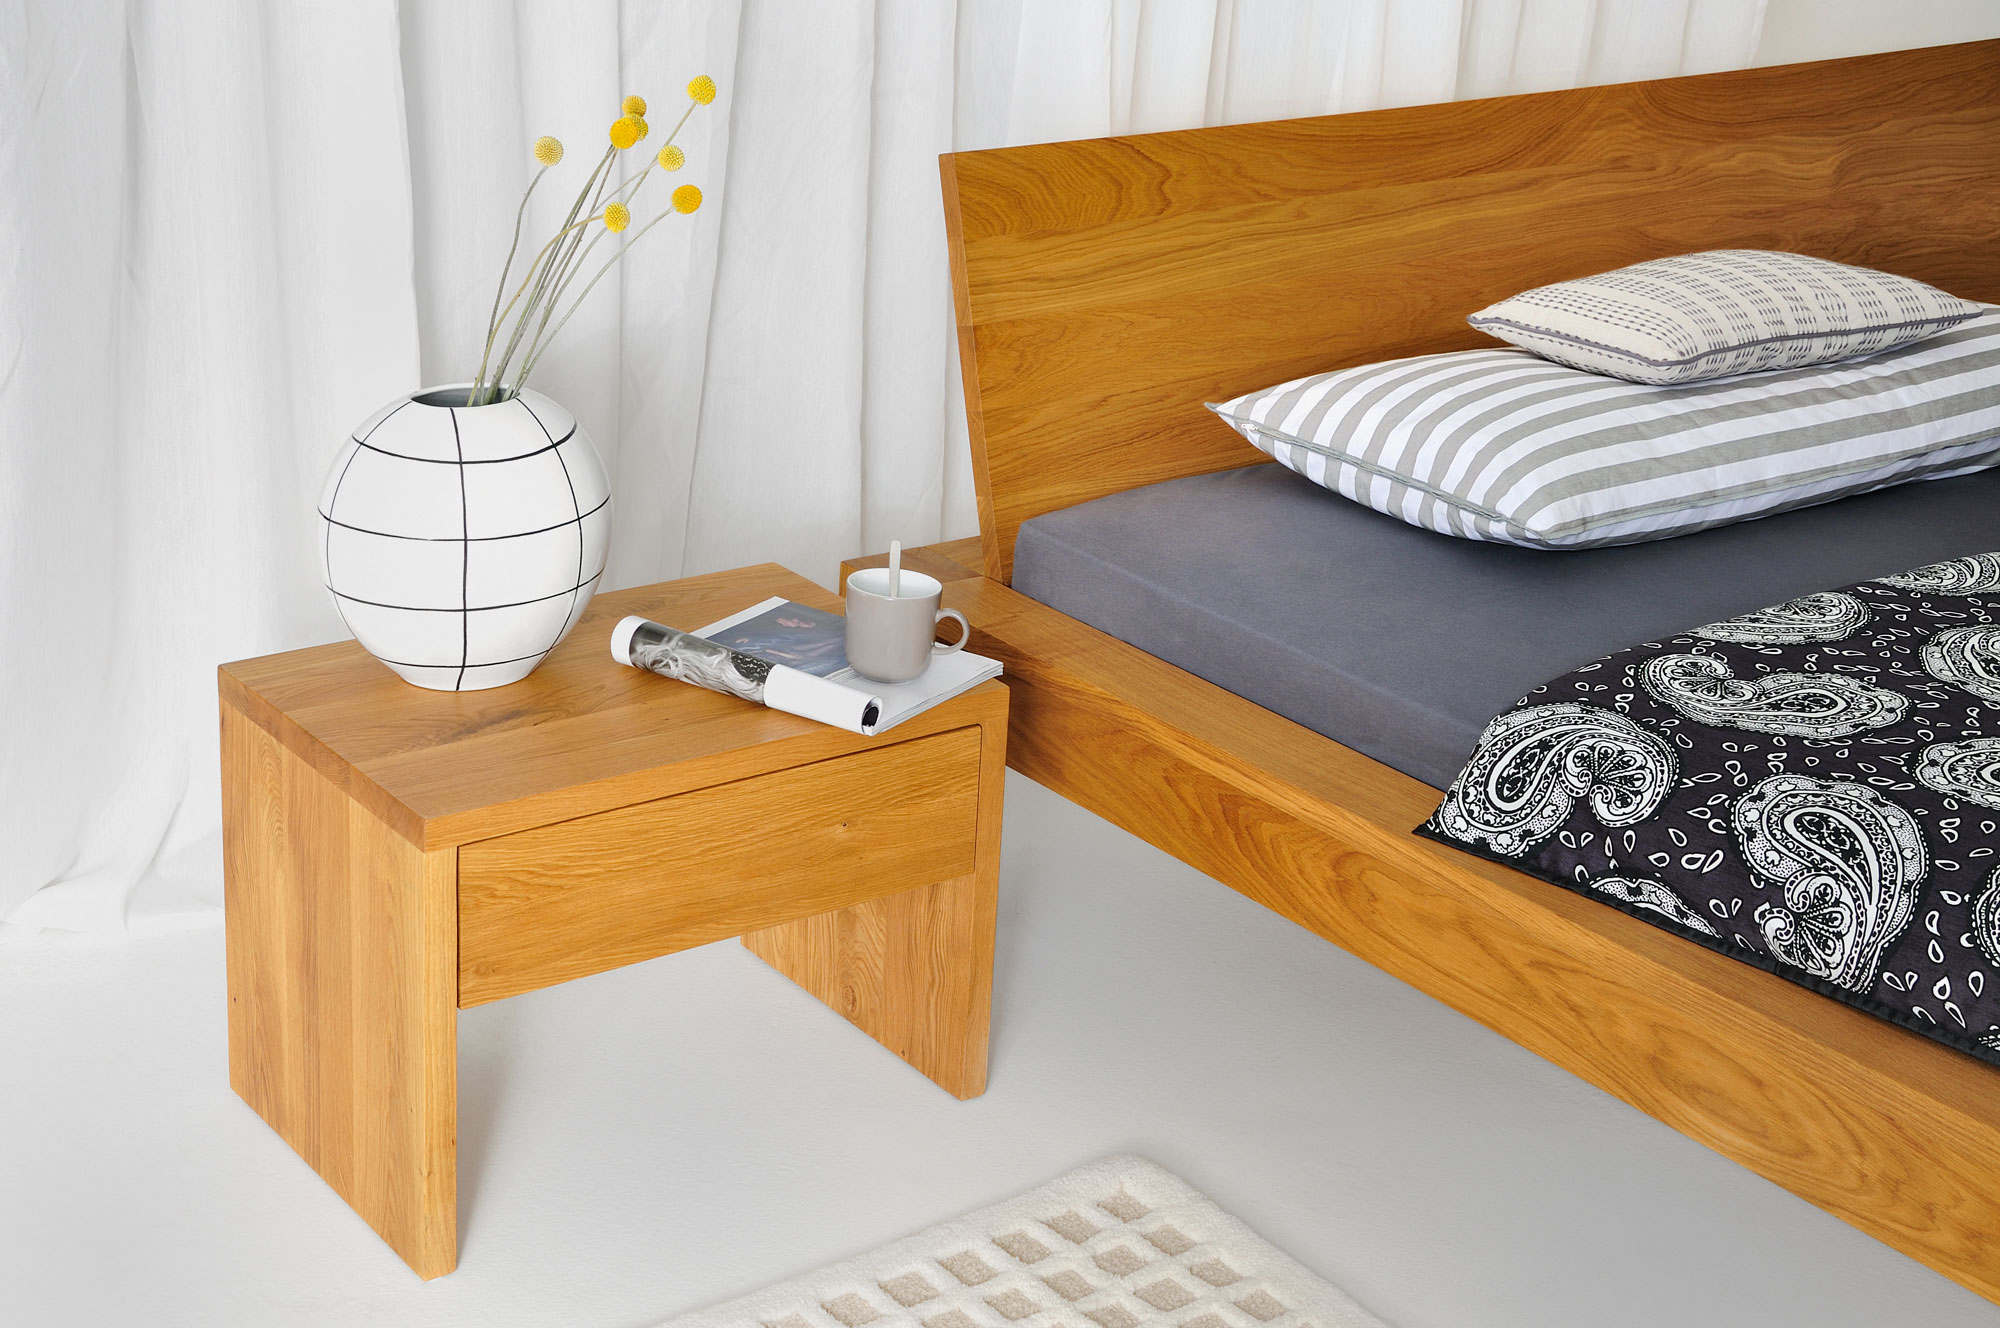 Rustic Oak Bed TAURUS 6328 custom made in solid wood by vitamin design